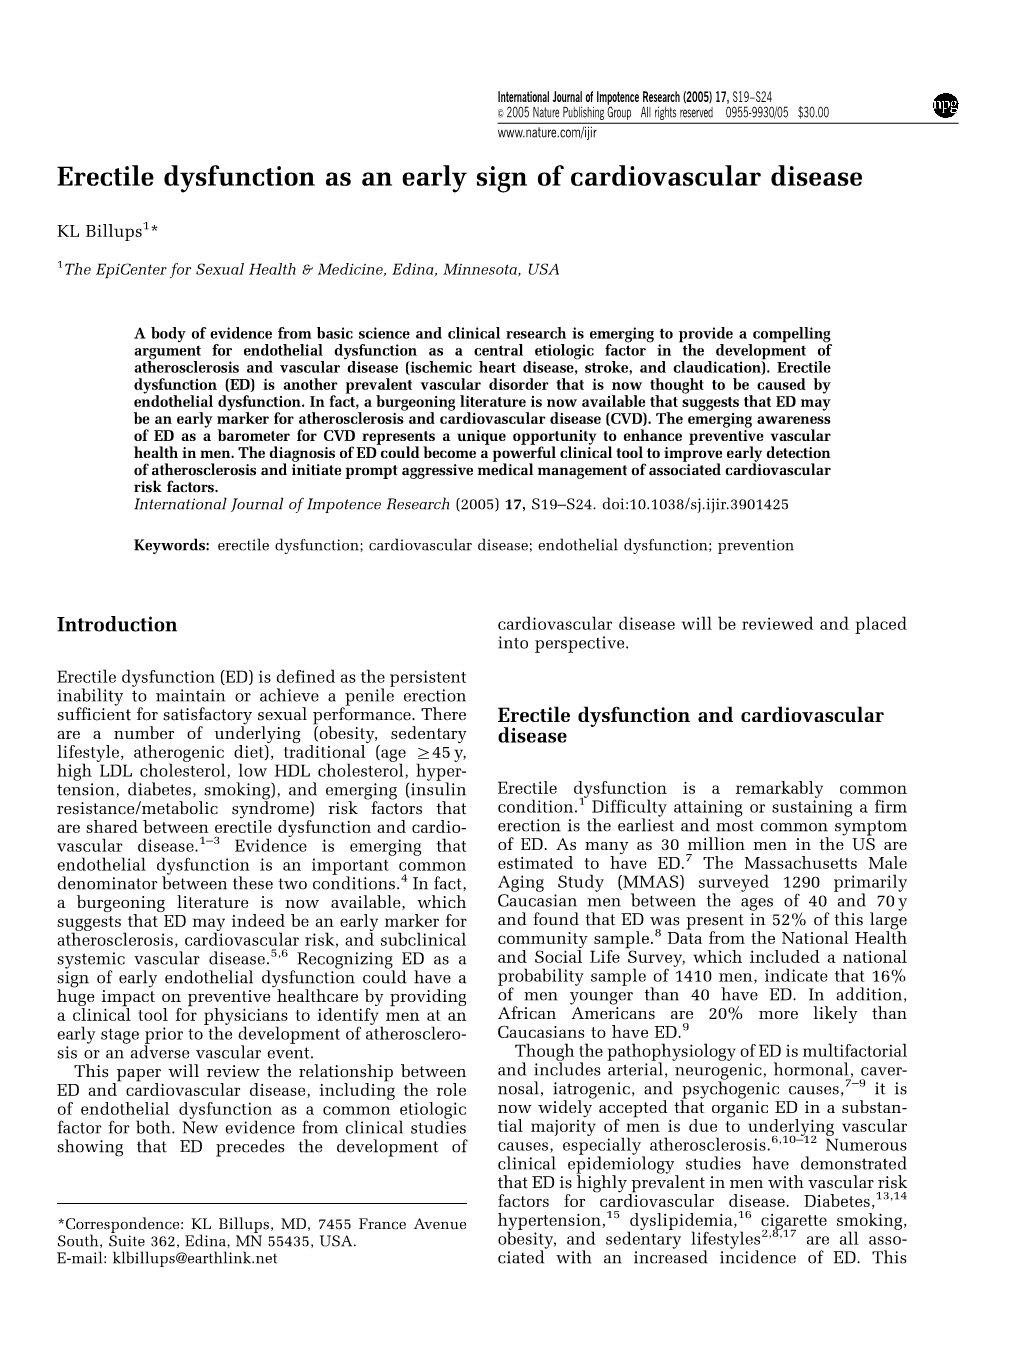 Erectile Dysfunction As an Early Sign of Cardiovascular Disease